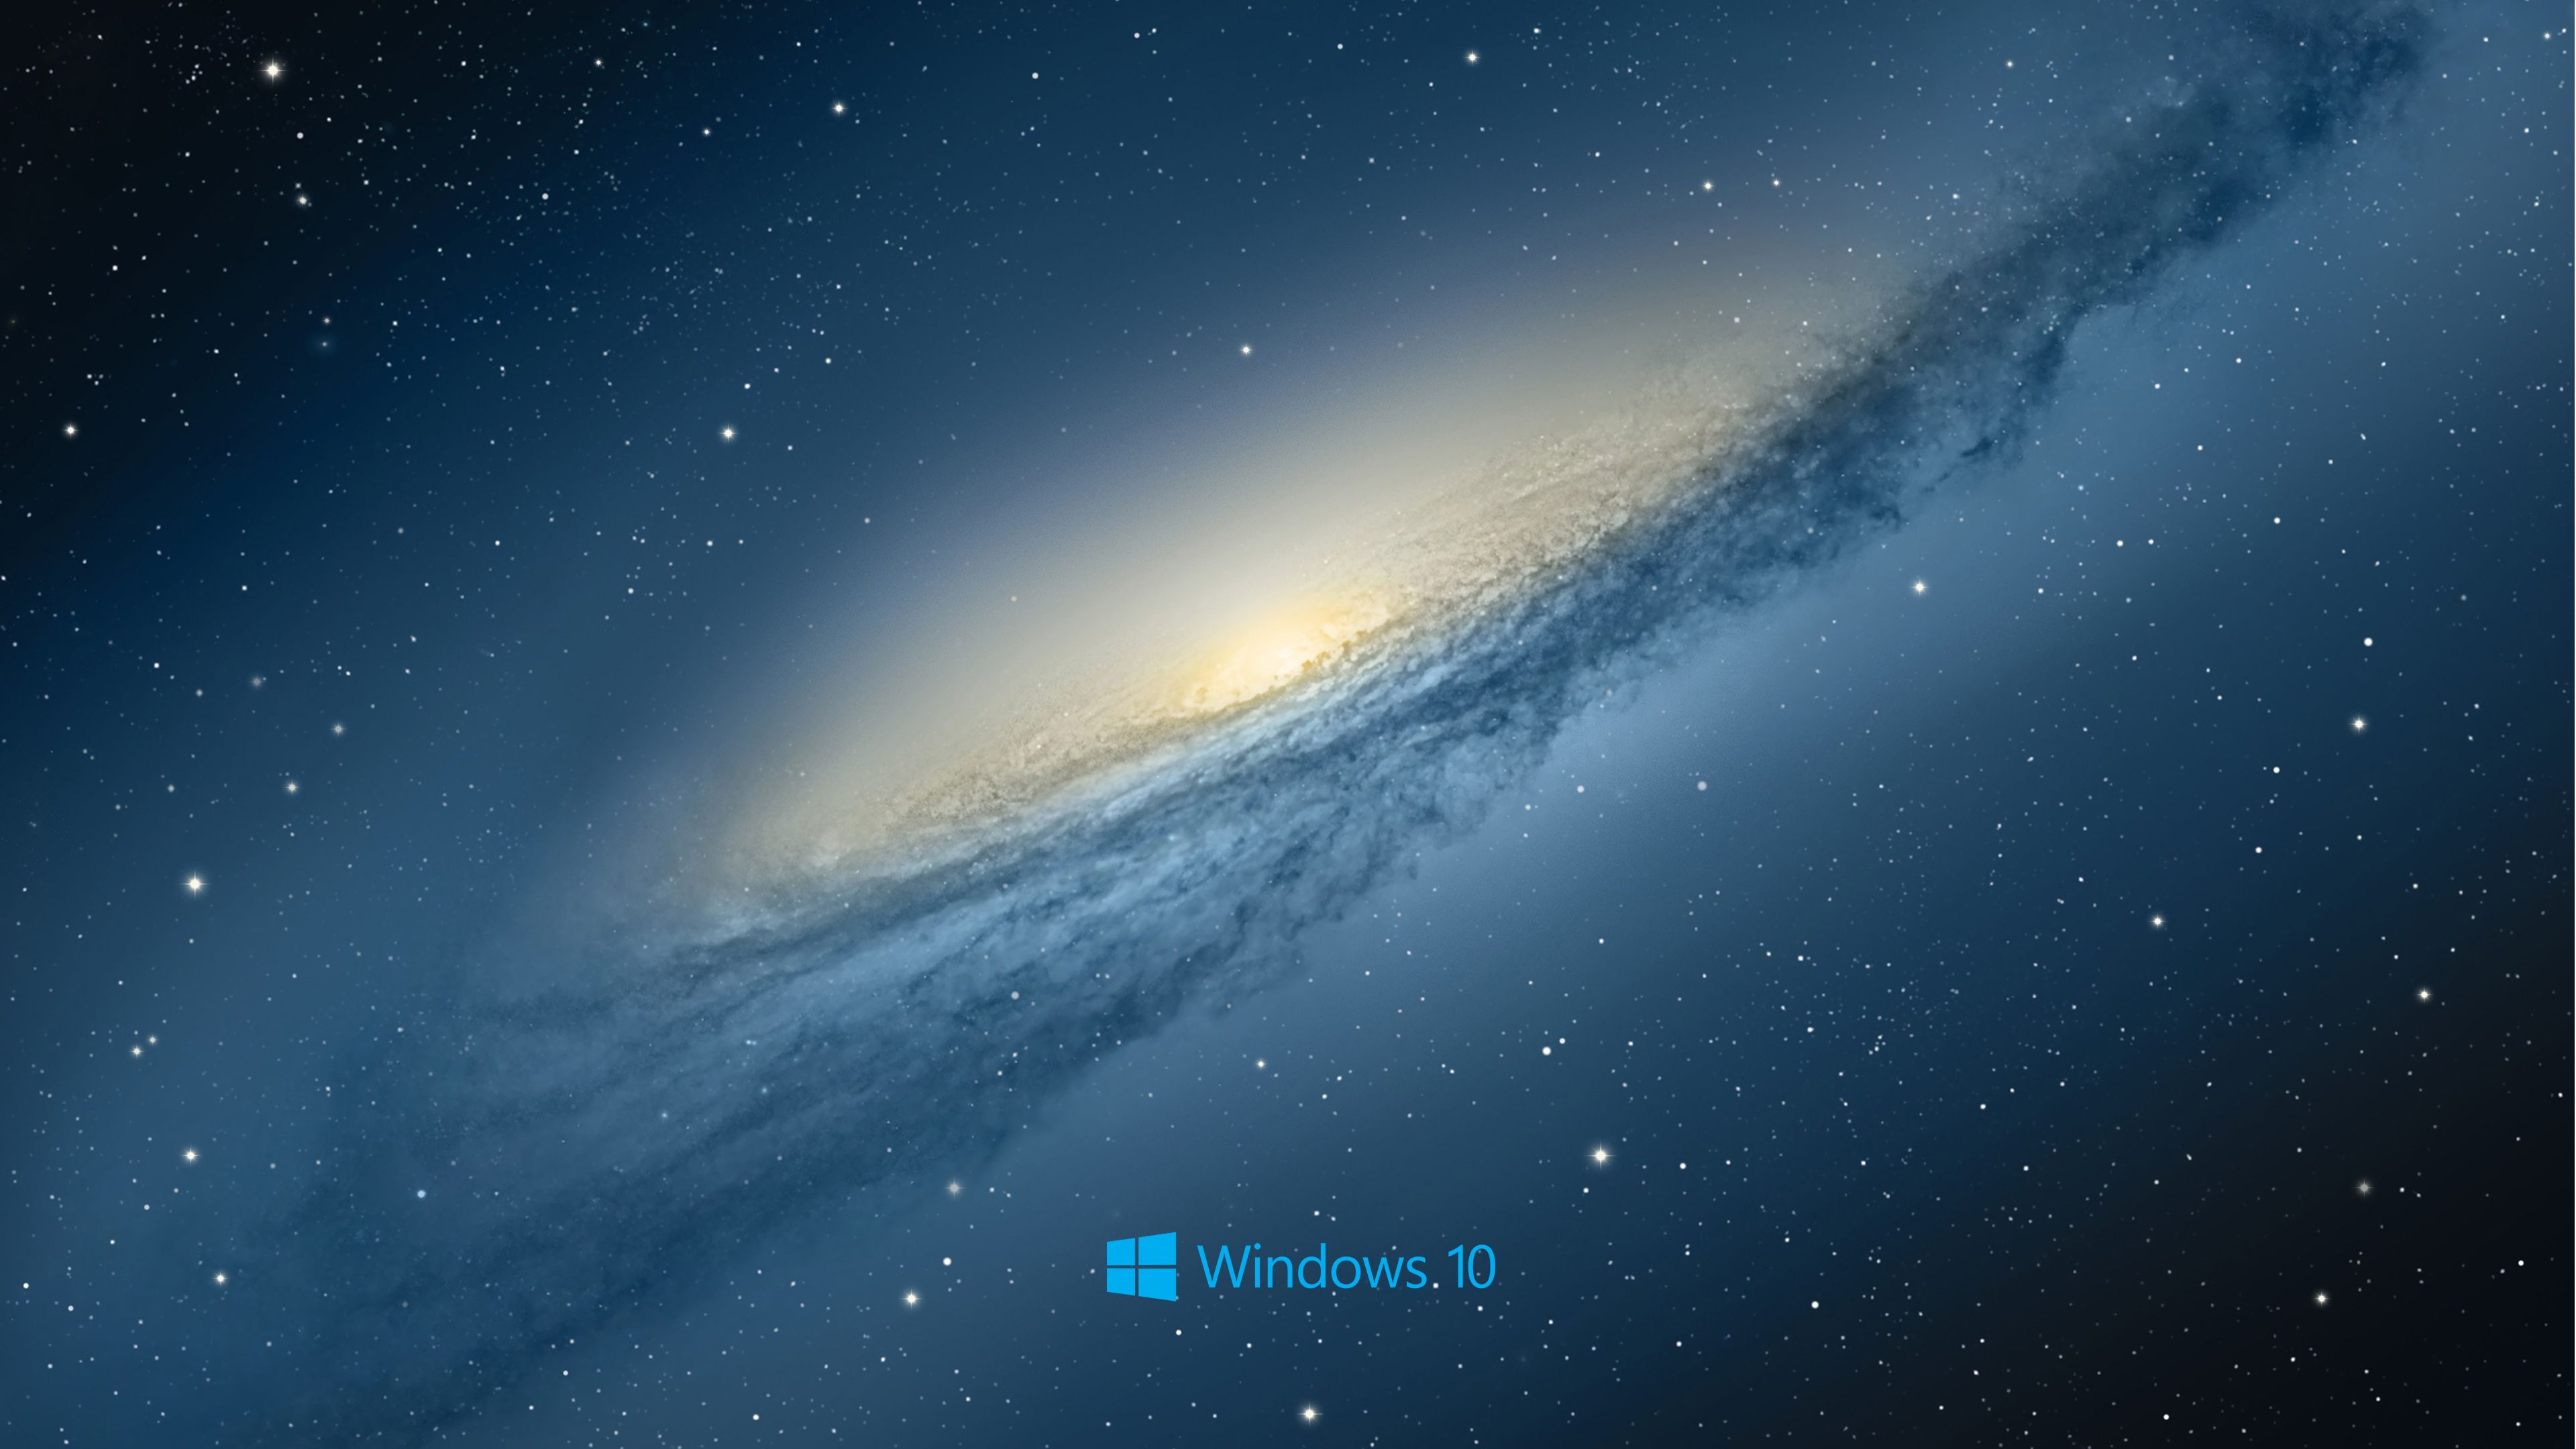 Windows 10 Desktop Wallpaper with Ultra HD 4K Wallpaper Wallpaper. Wallpaper Download. High Resolution Wallpaper